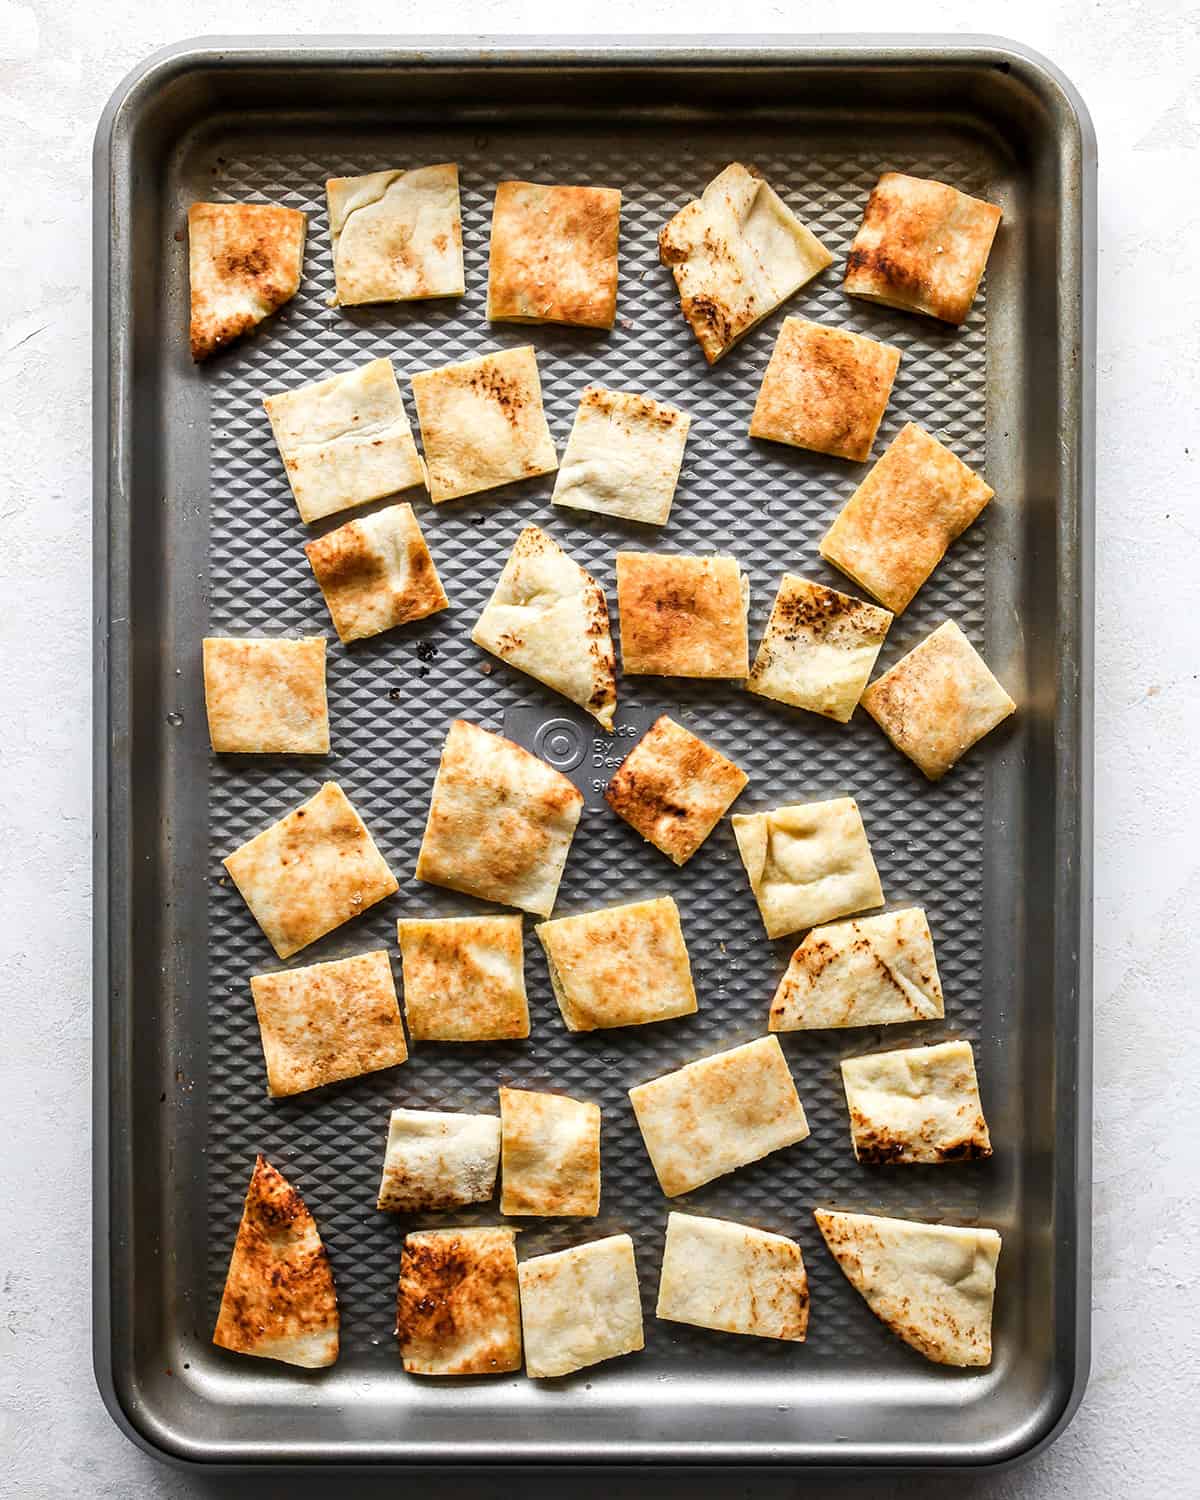 how to make greek salad - pita croutons on a baking sheet after baking